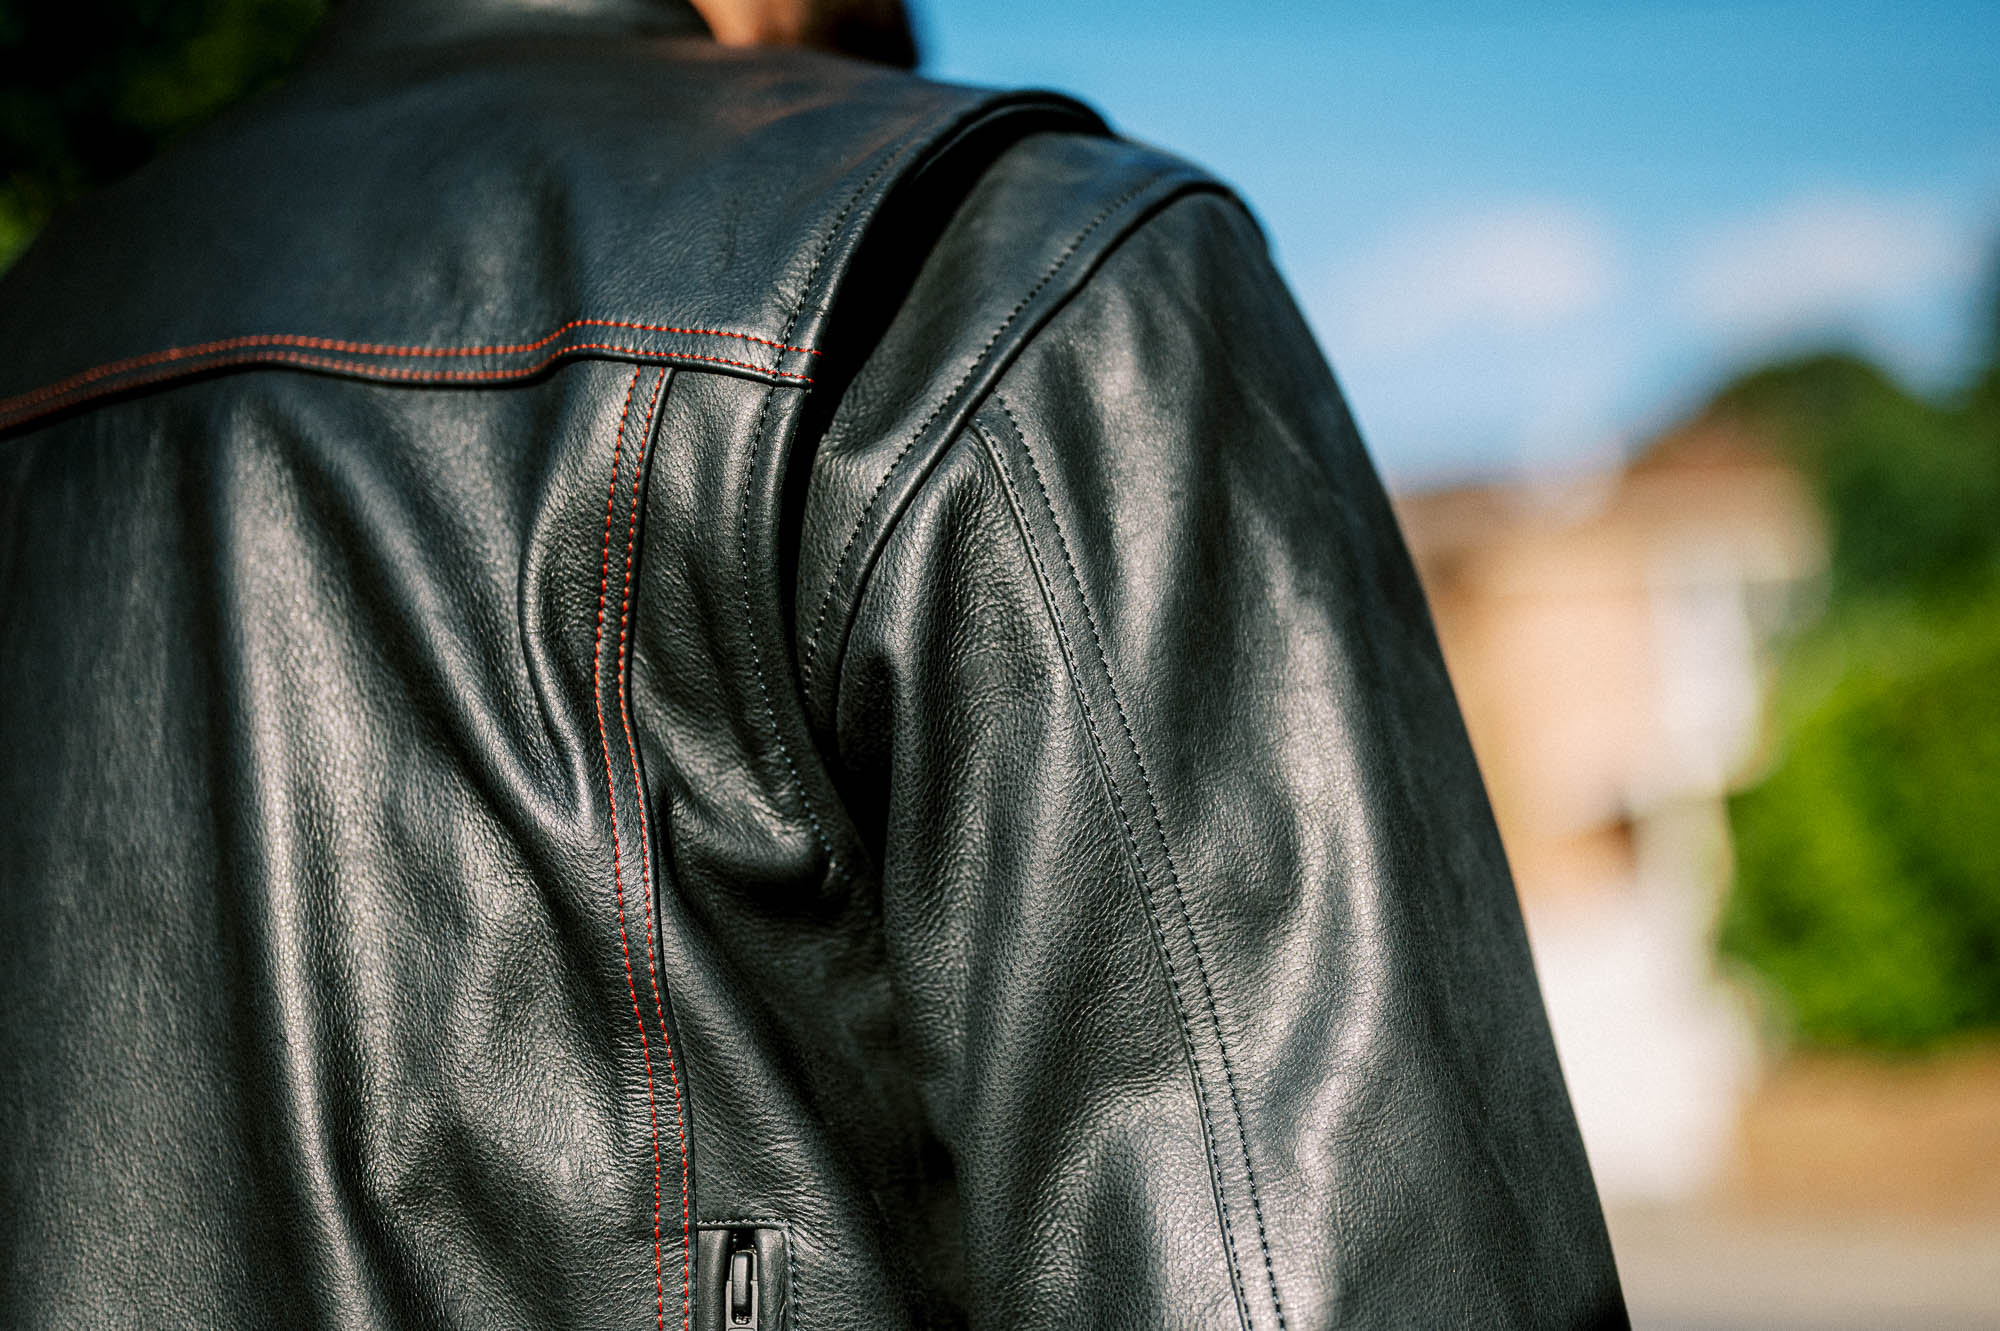 Black Pup Moto's new Rumbler Jacket on a rider - detail shot